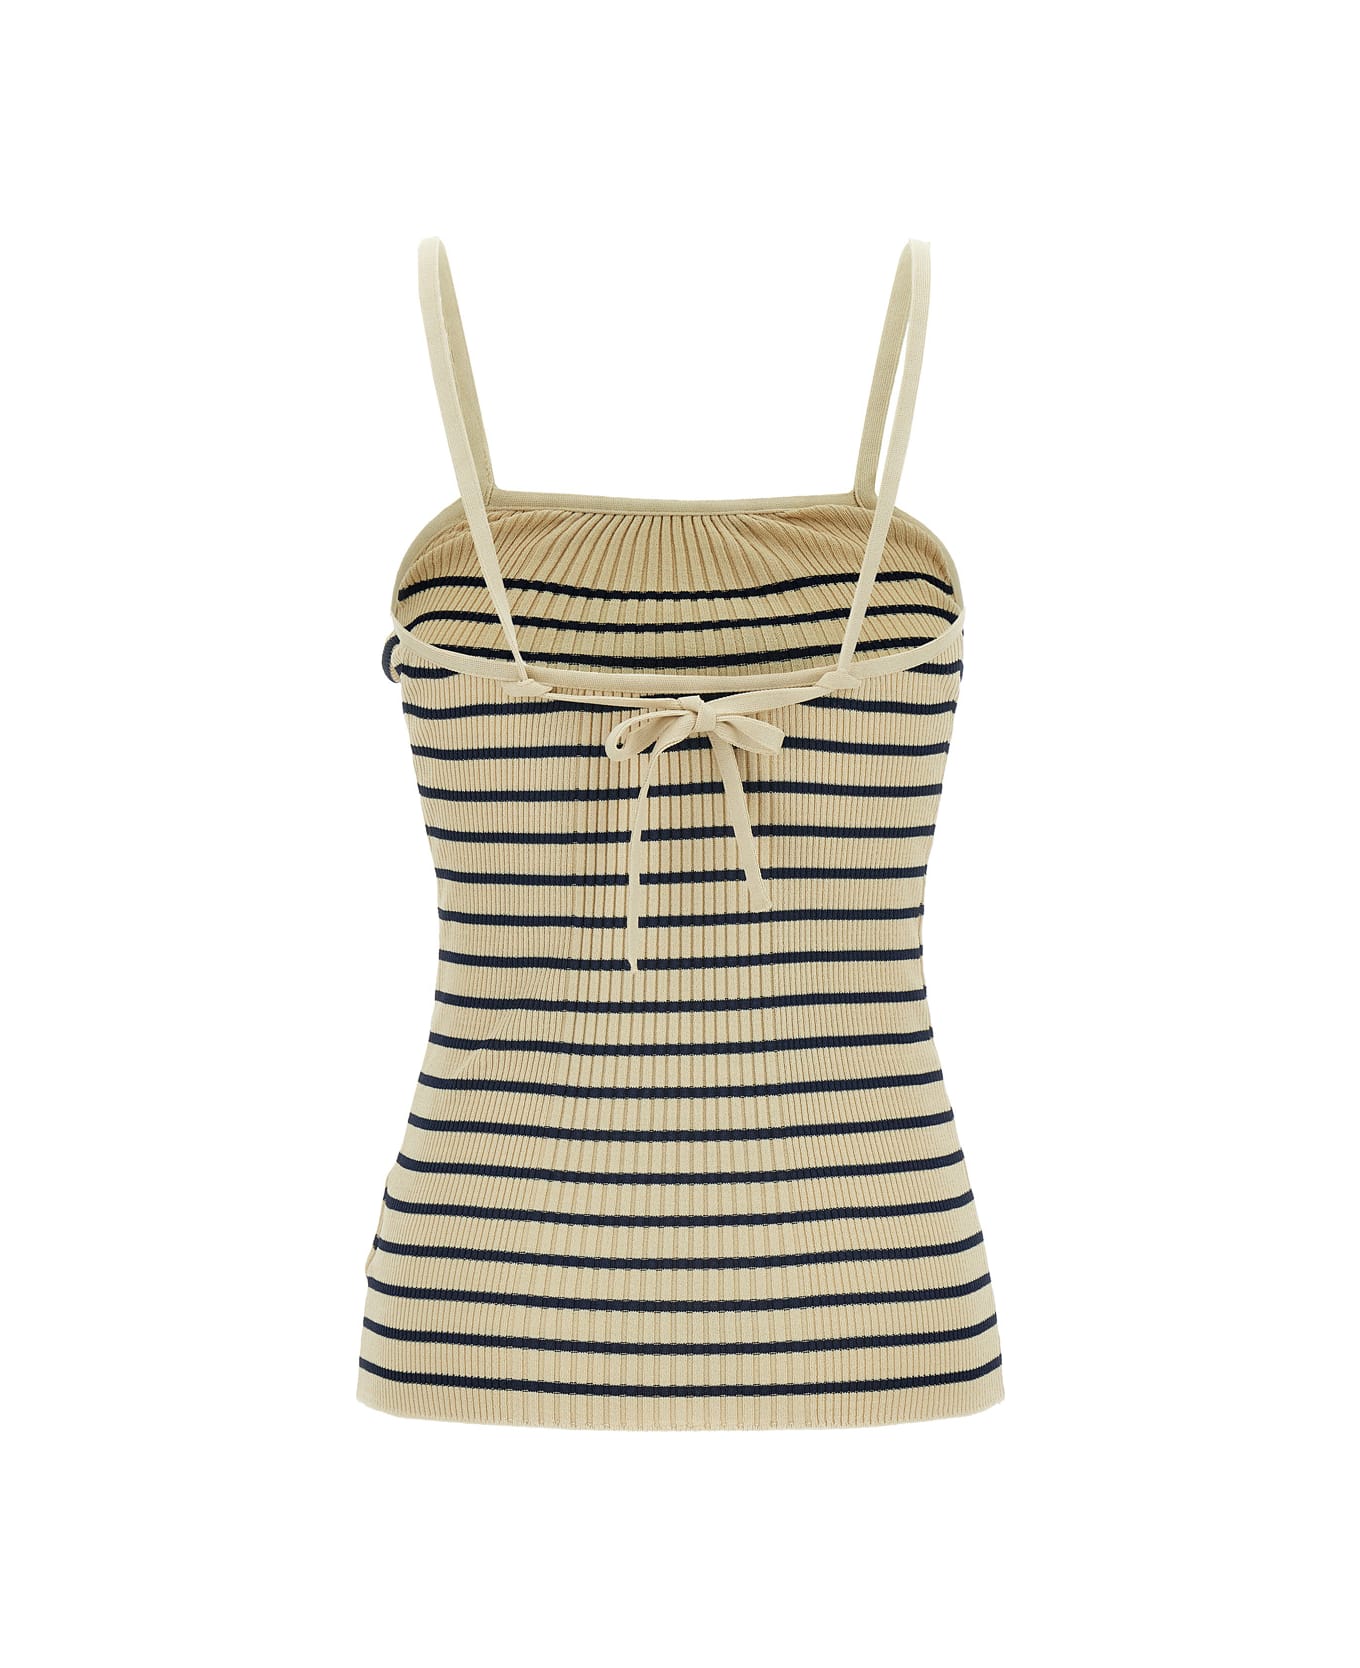 Low Classic Beige Halterneck Top With Stripe Motif In Rayon Blend Woman - Beige